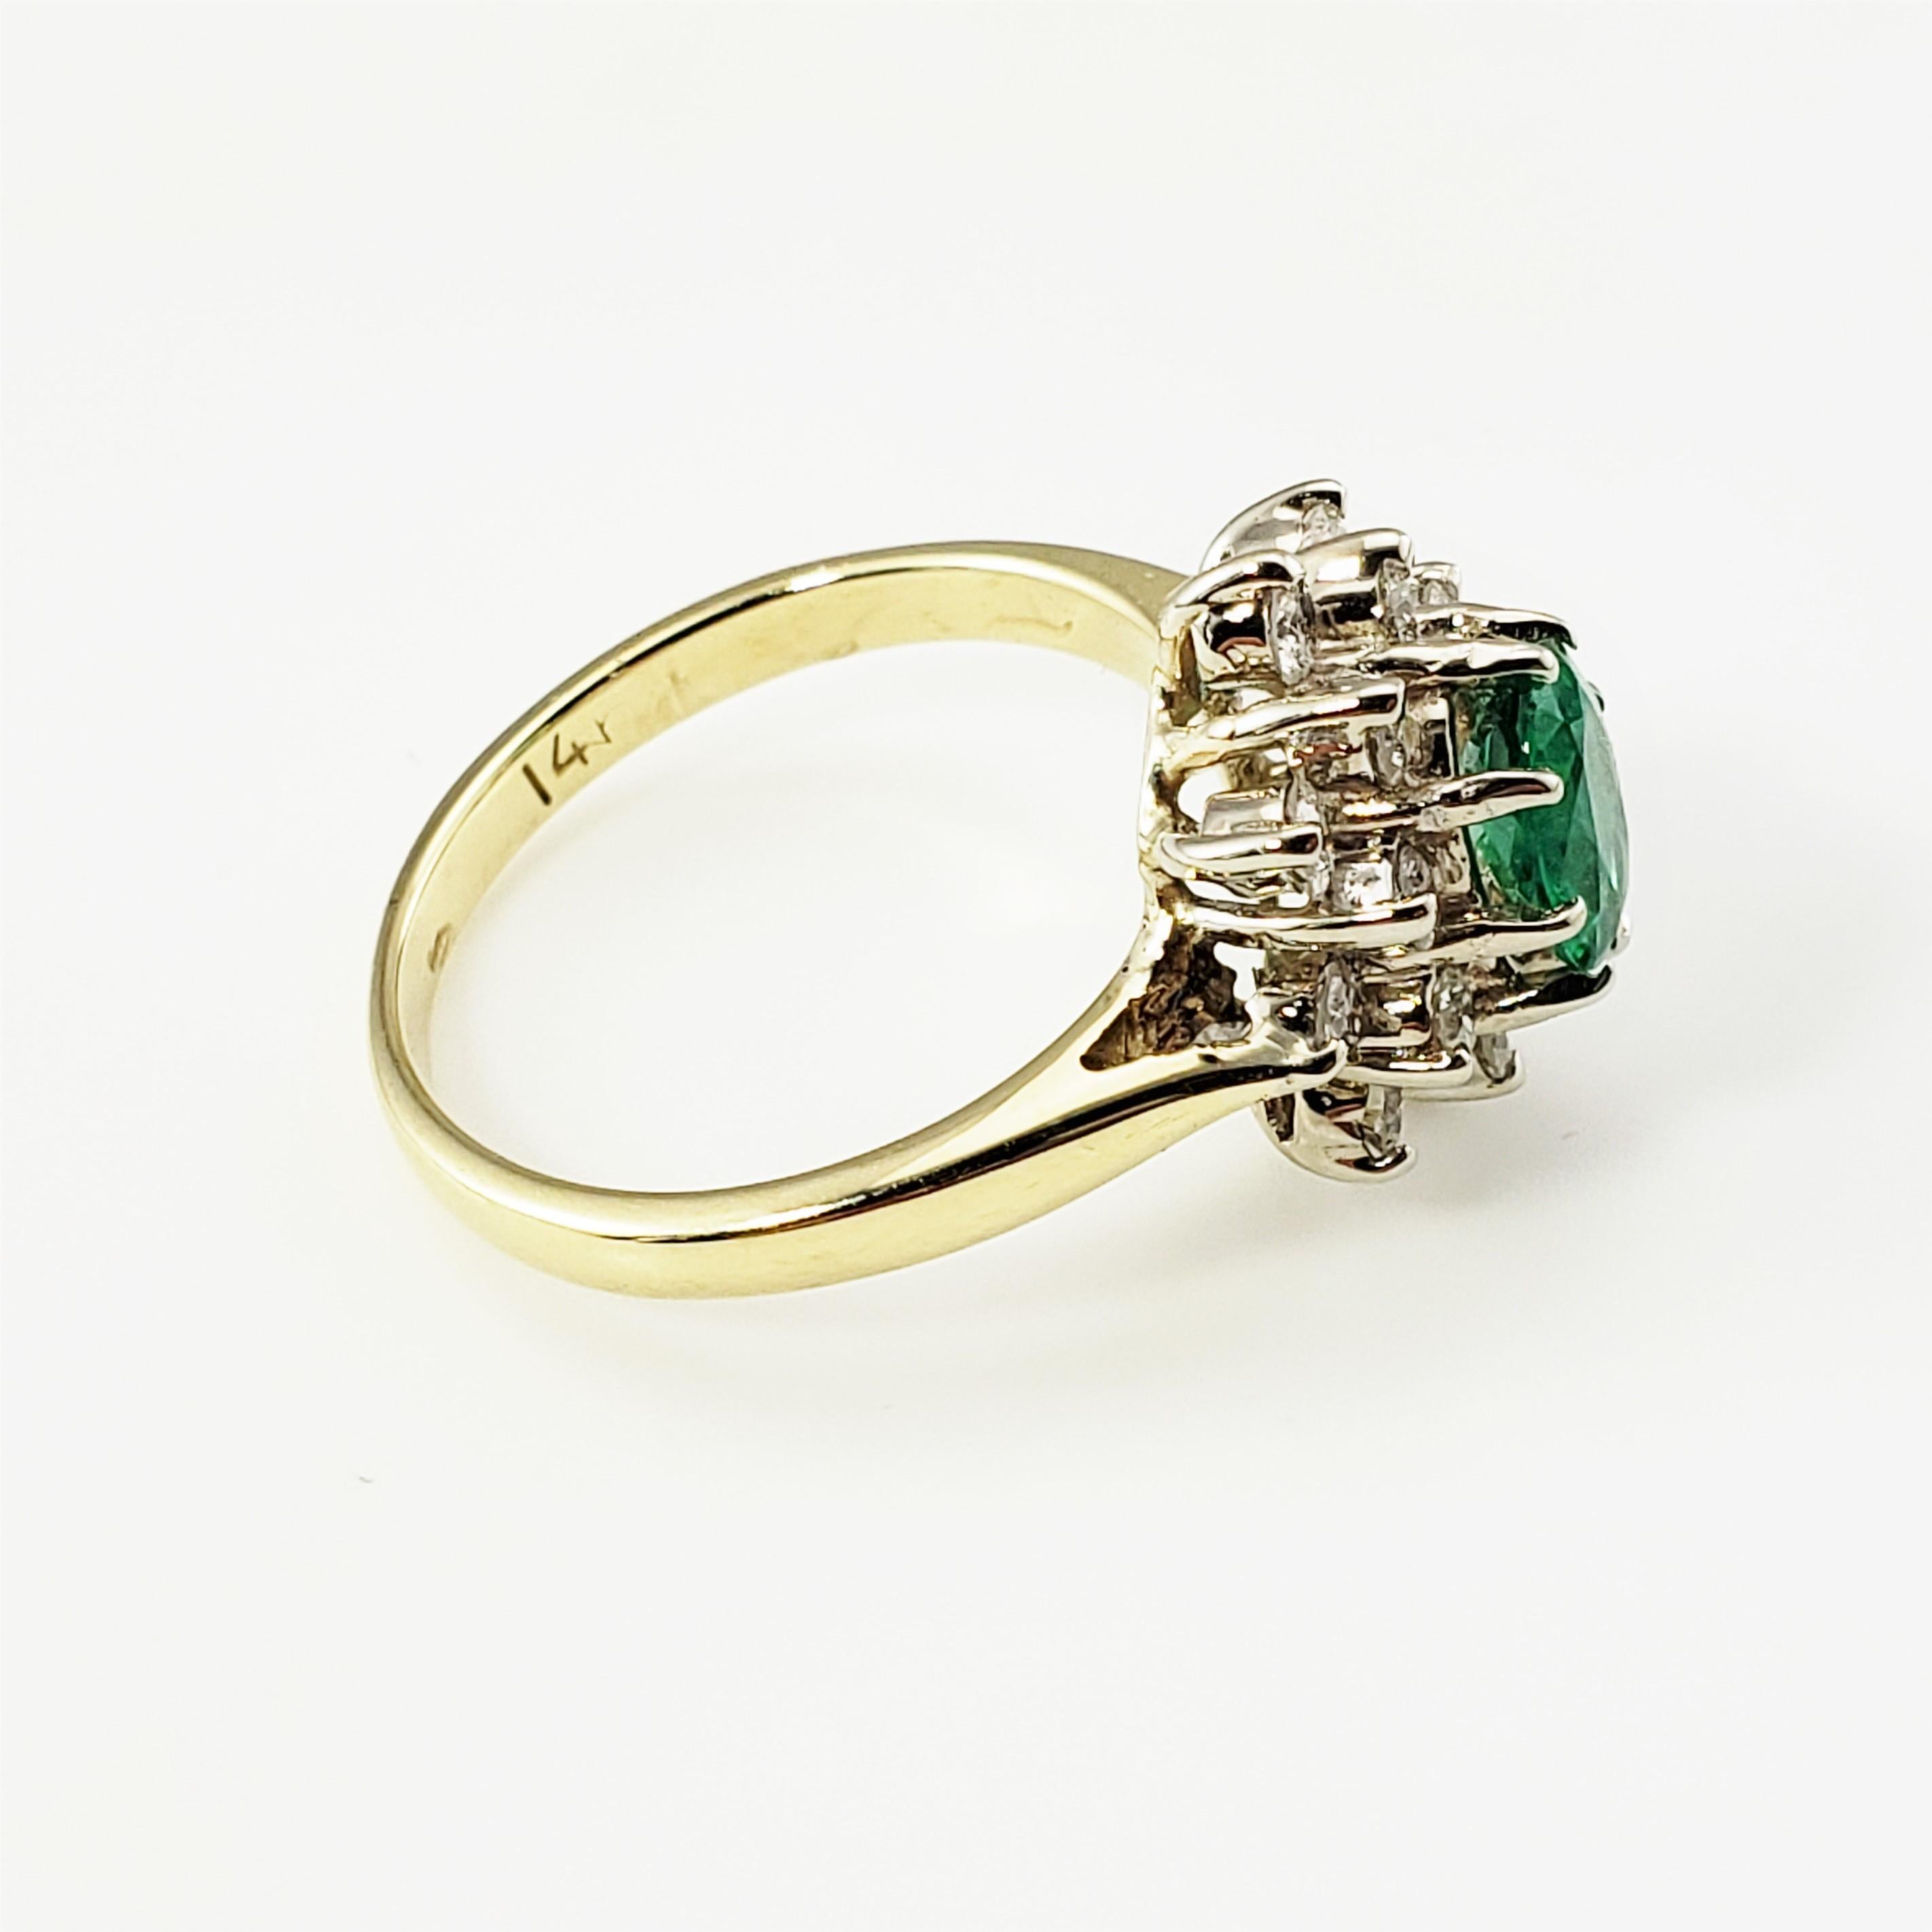 Brilliant Cut 14 Karat Yellow Gold Emerald and Diamond Ring